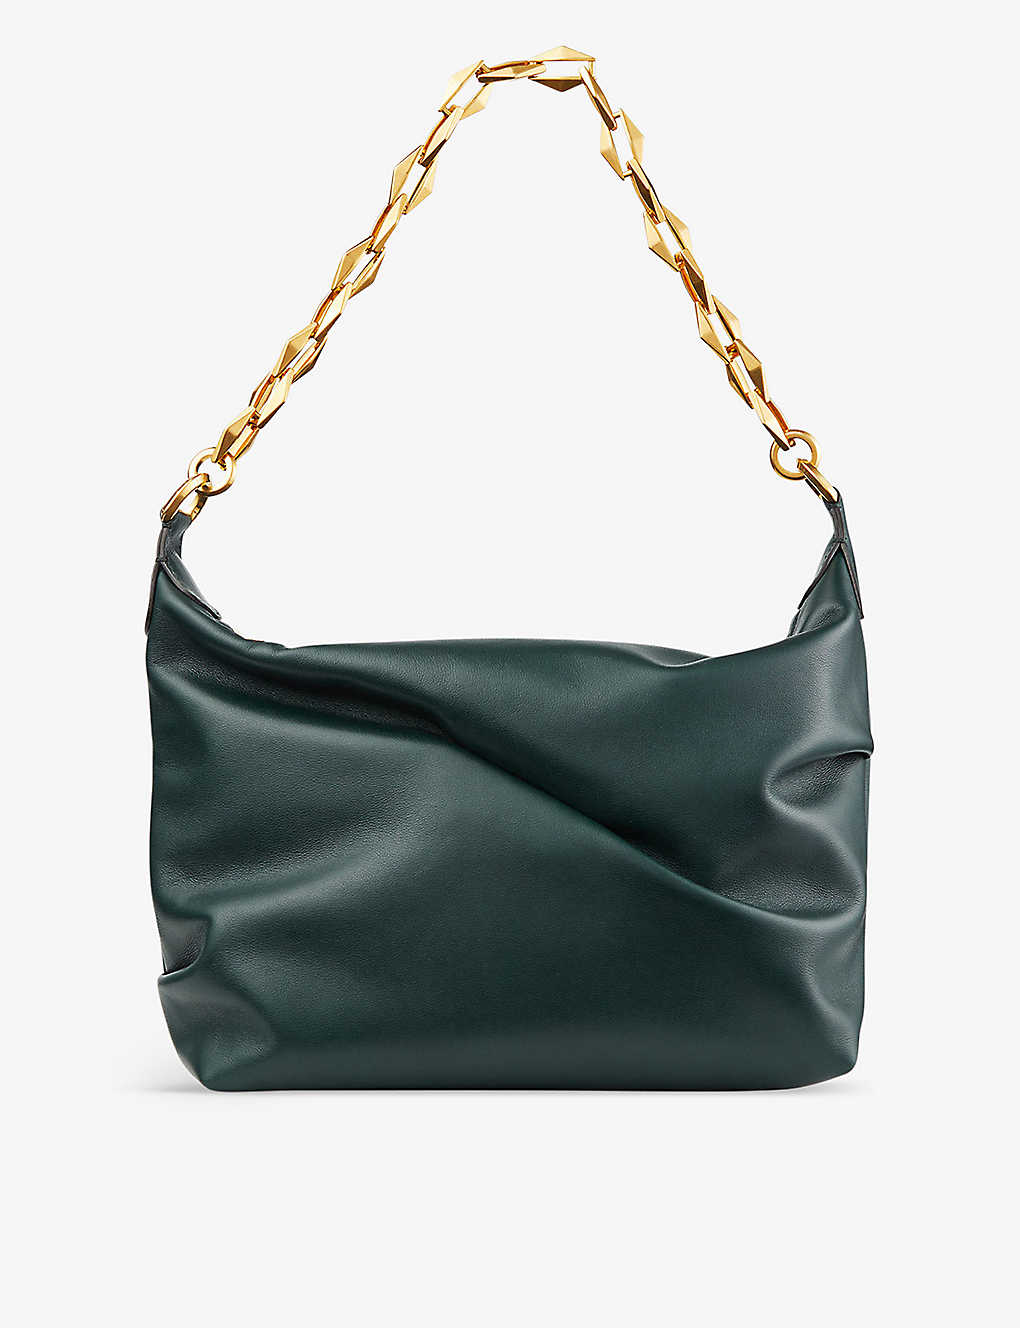 Jimmy Choo Diamond Leather Hobo Bag In Dark Green/gold